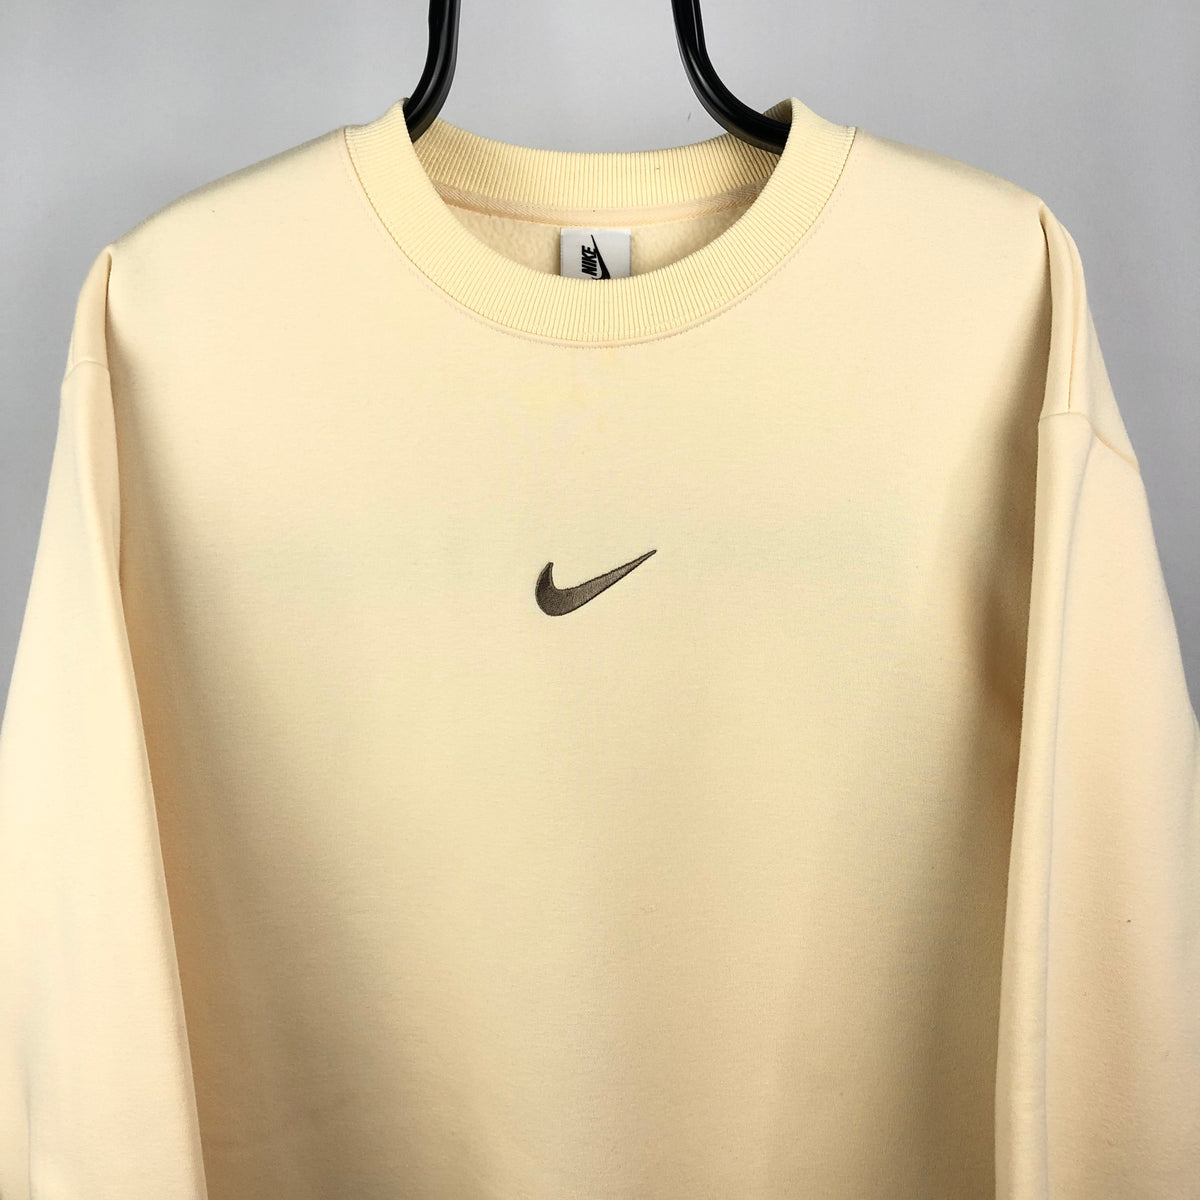 Nike Centre Sweatshirt in Cream - Men's Large - Clothing